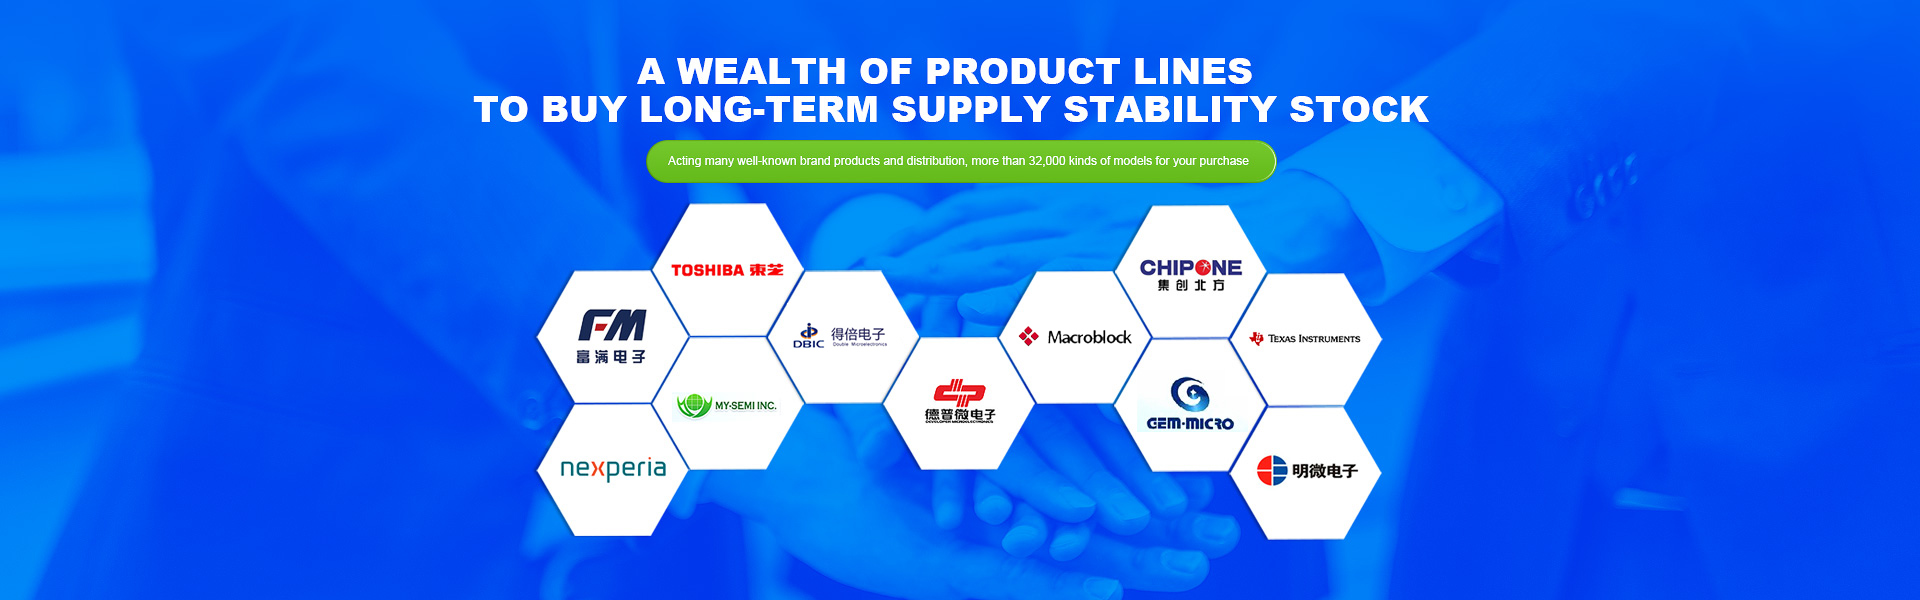 Fuzhou product line picking, F